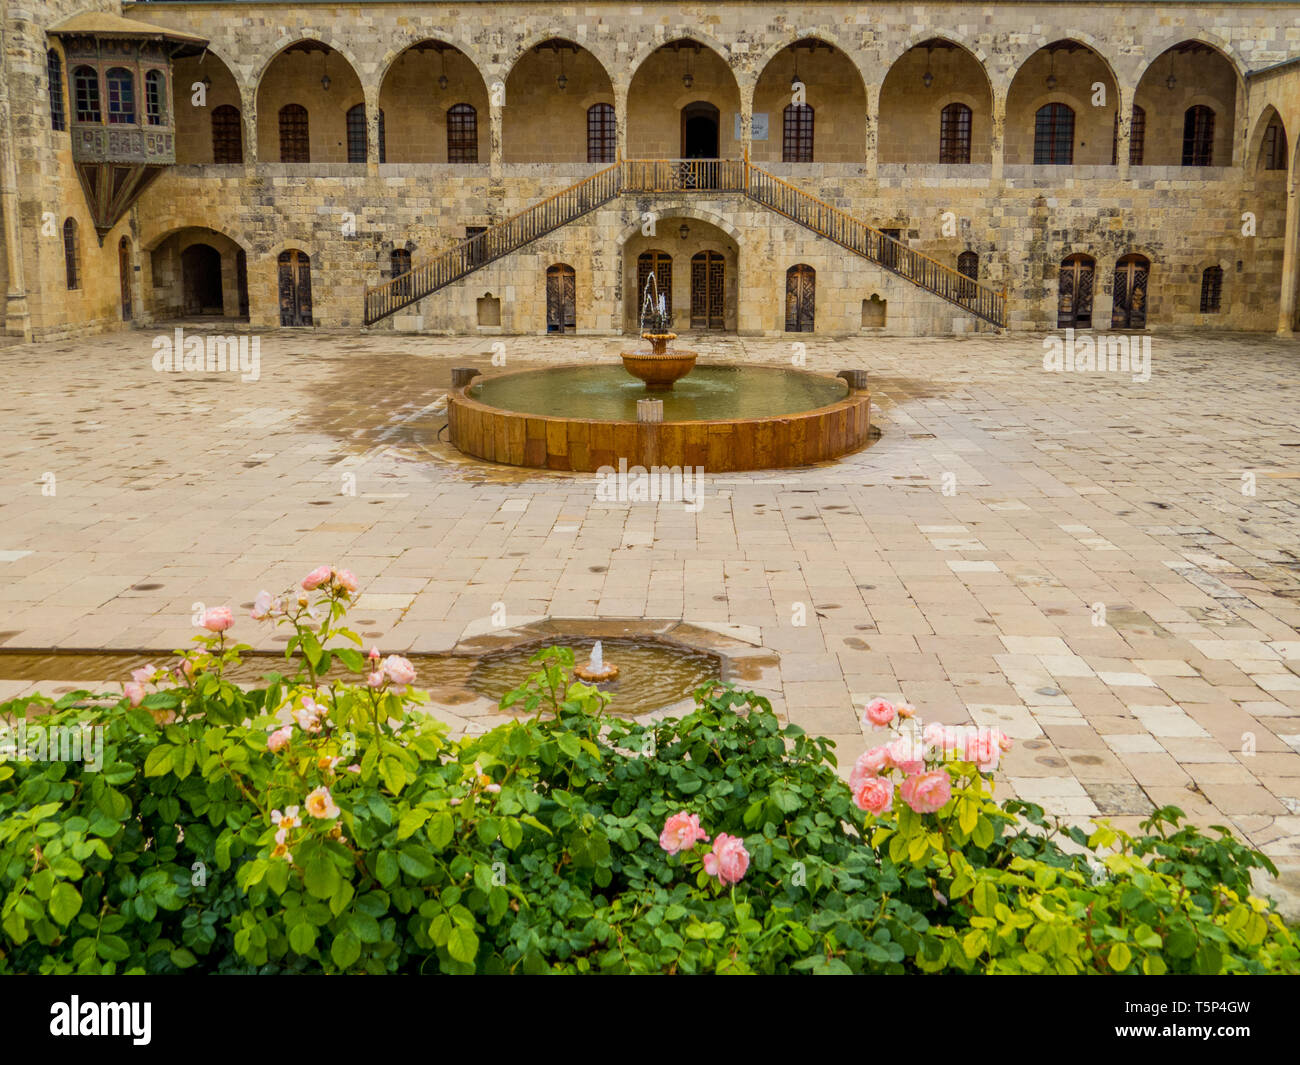 Beiteddine Palace, Lebanon Stock Photo